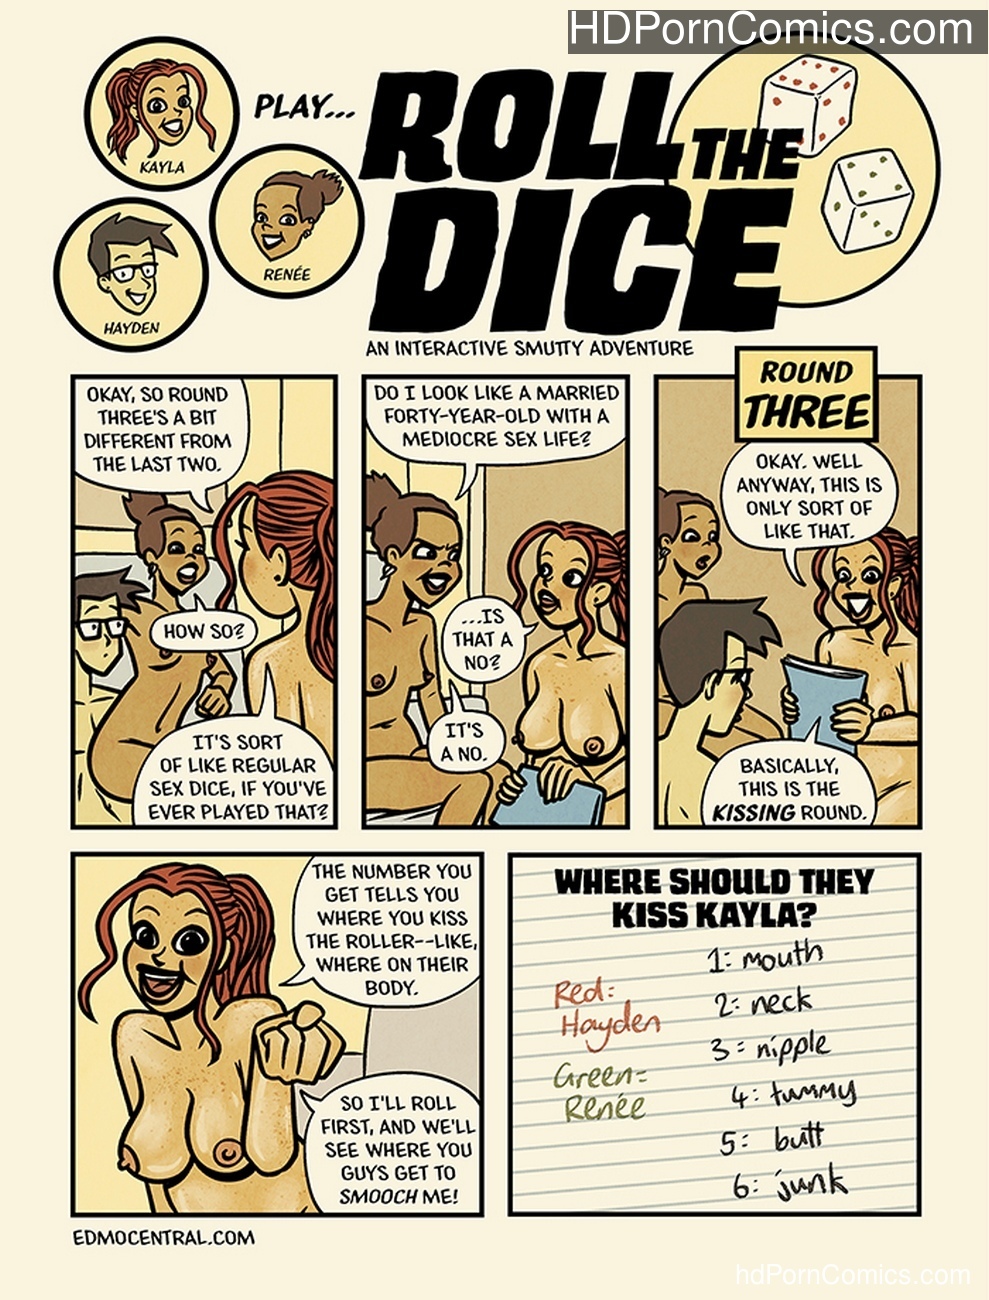 Lesbian dice game